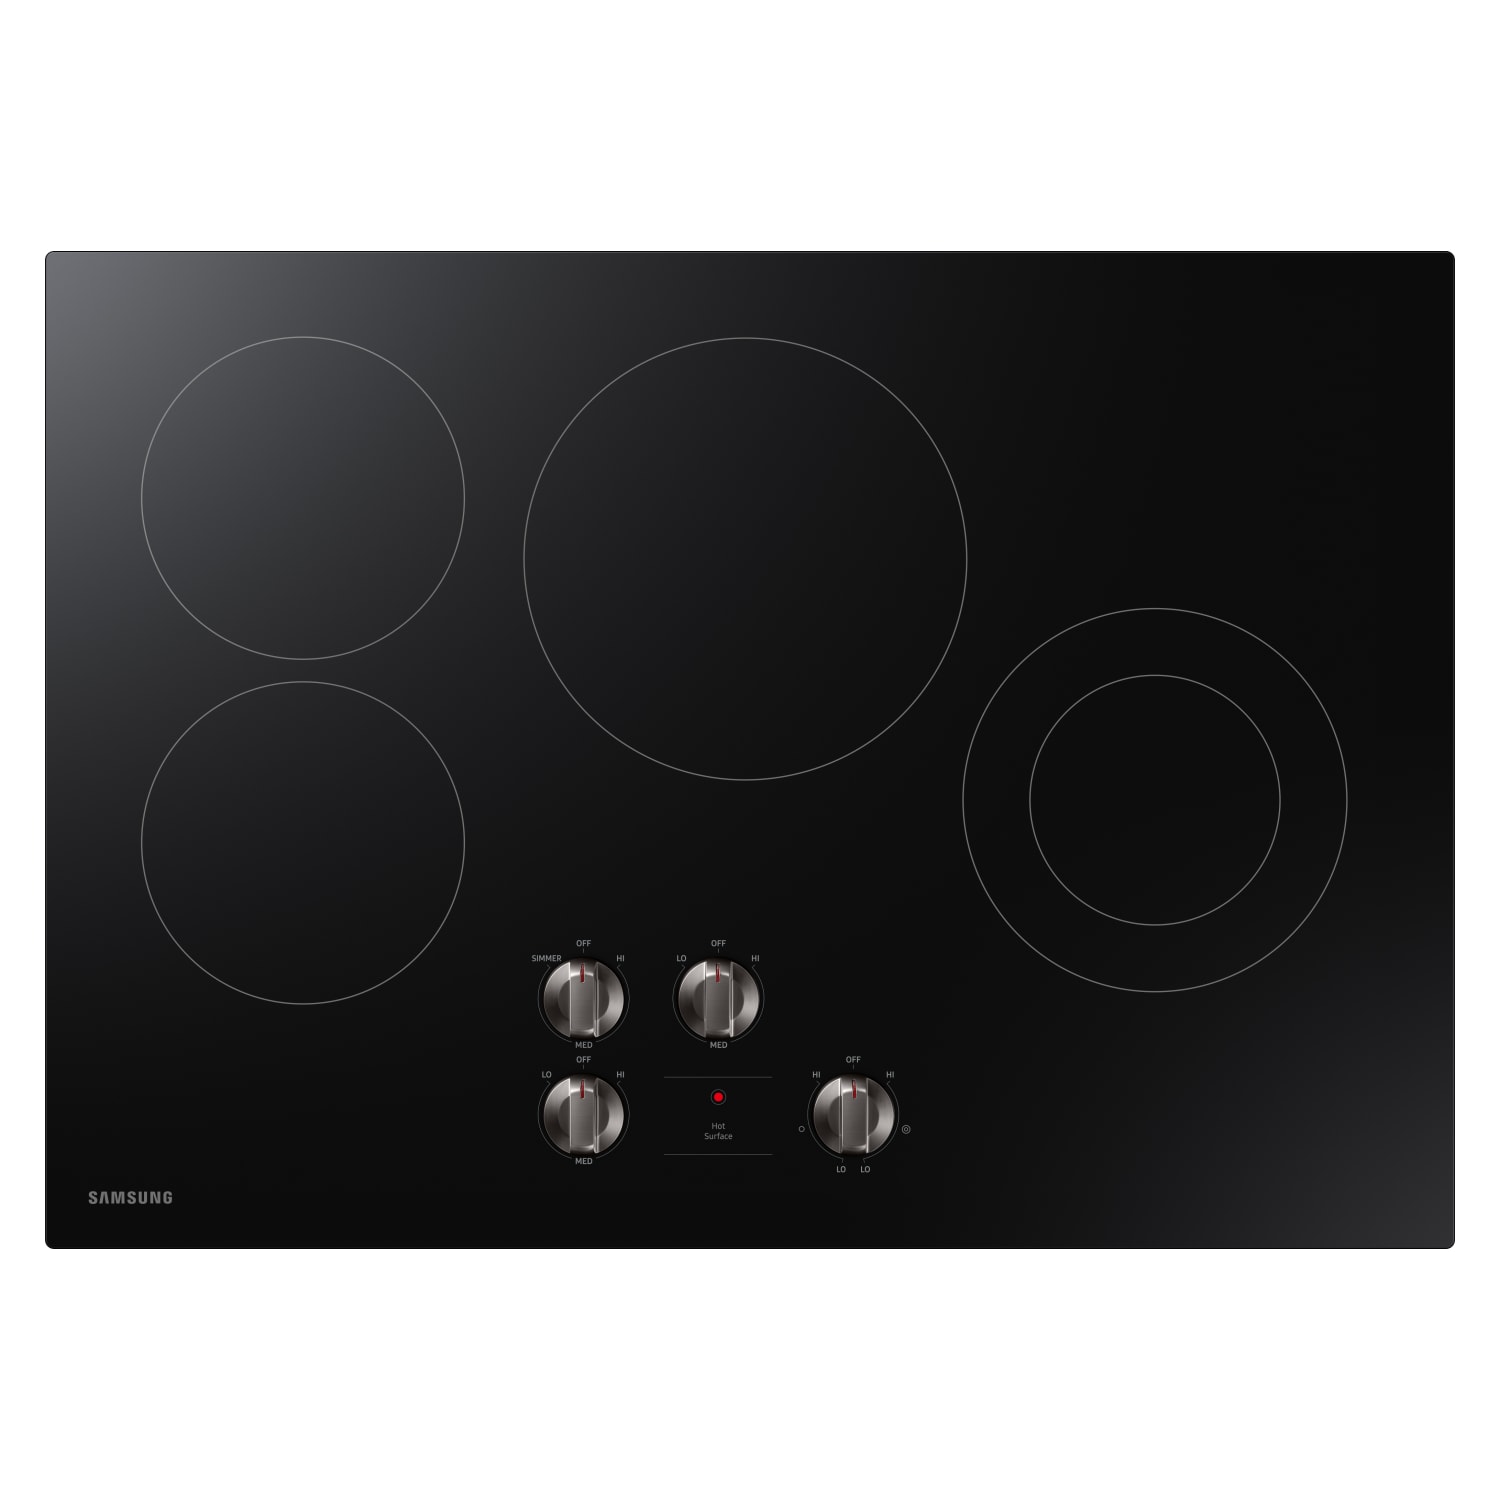 Samsung 30”, 4 Elements Cooktop - Black - NZ30R5330RK